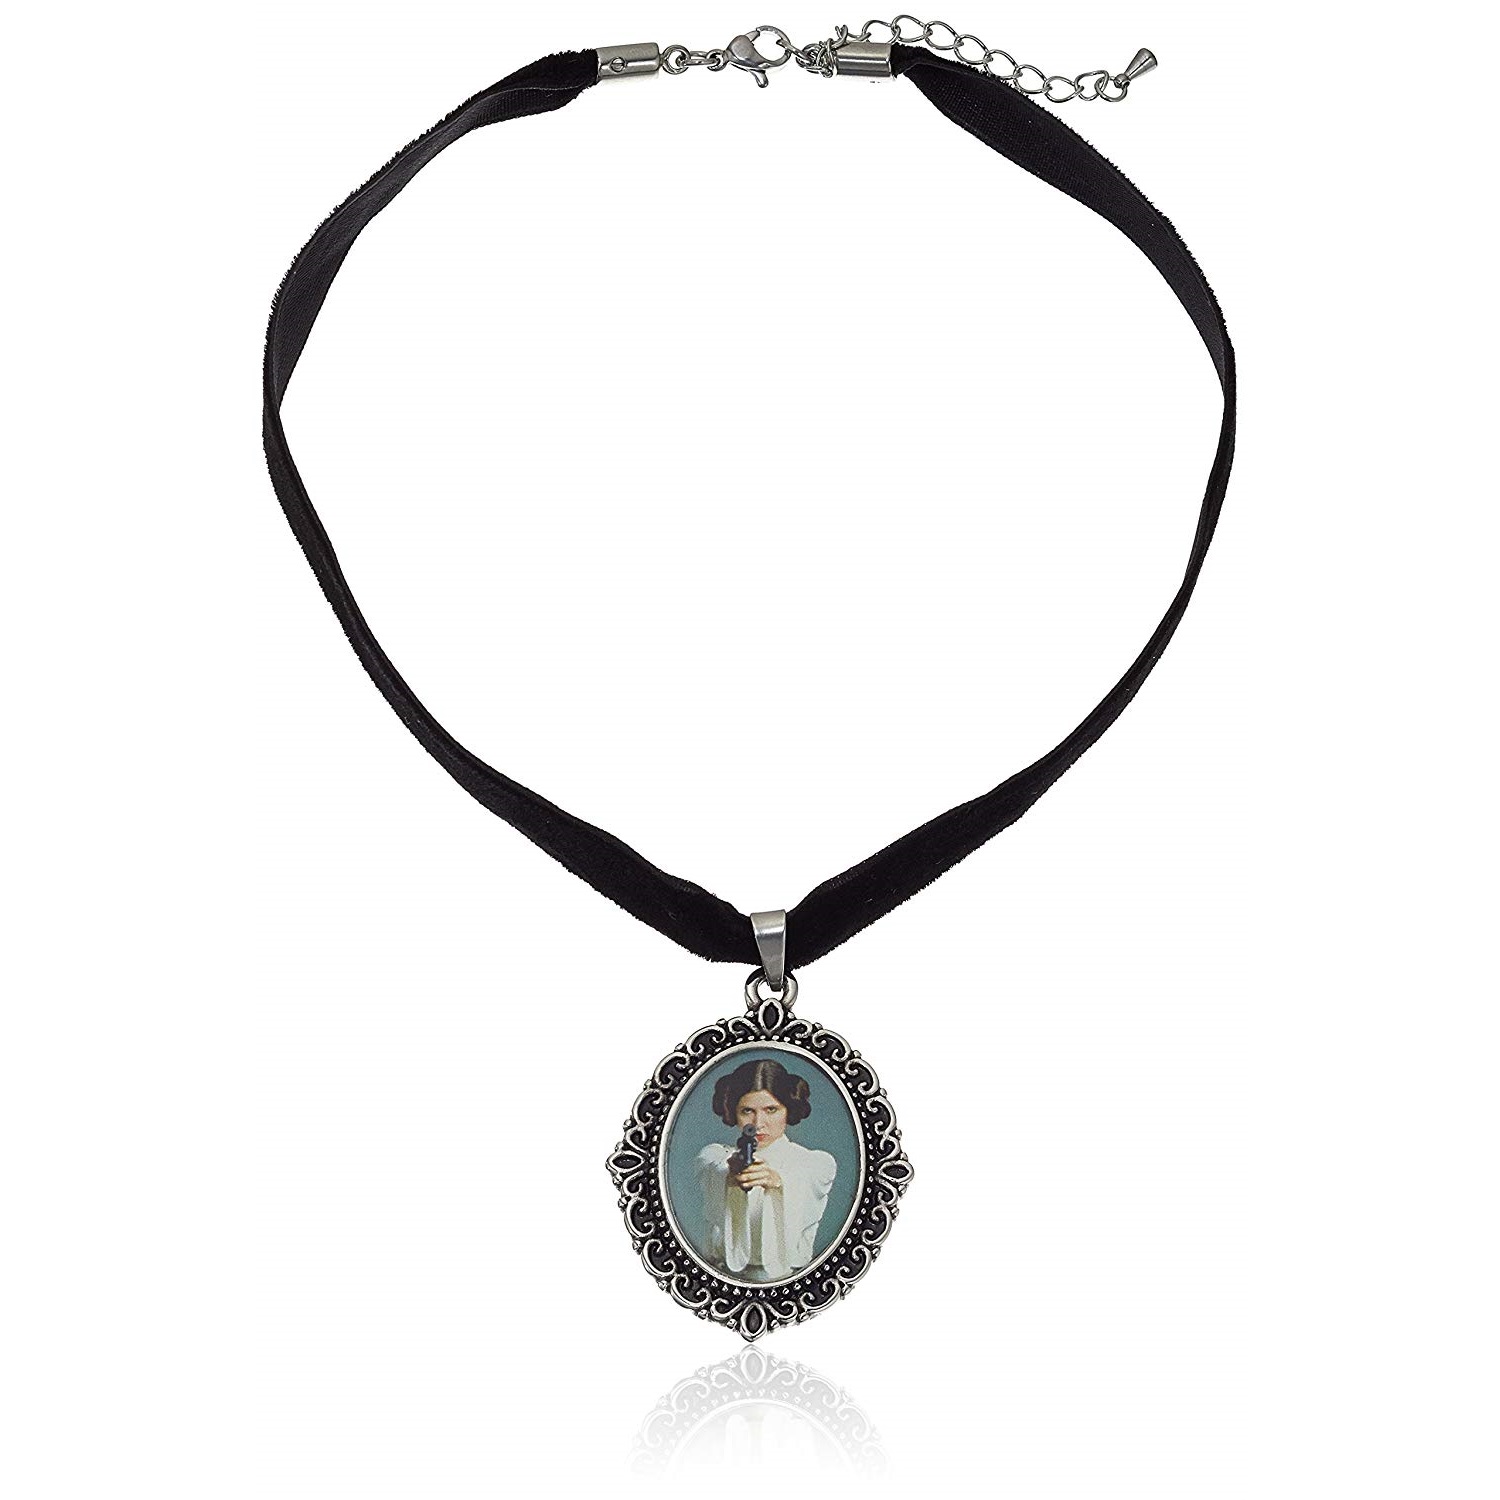 Body Vibe x Star Wars Princess Leia Cameo Necklace on Amazon